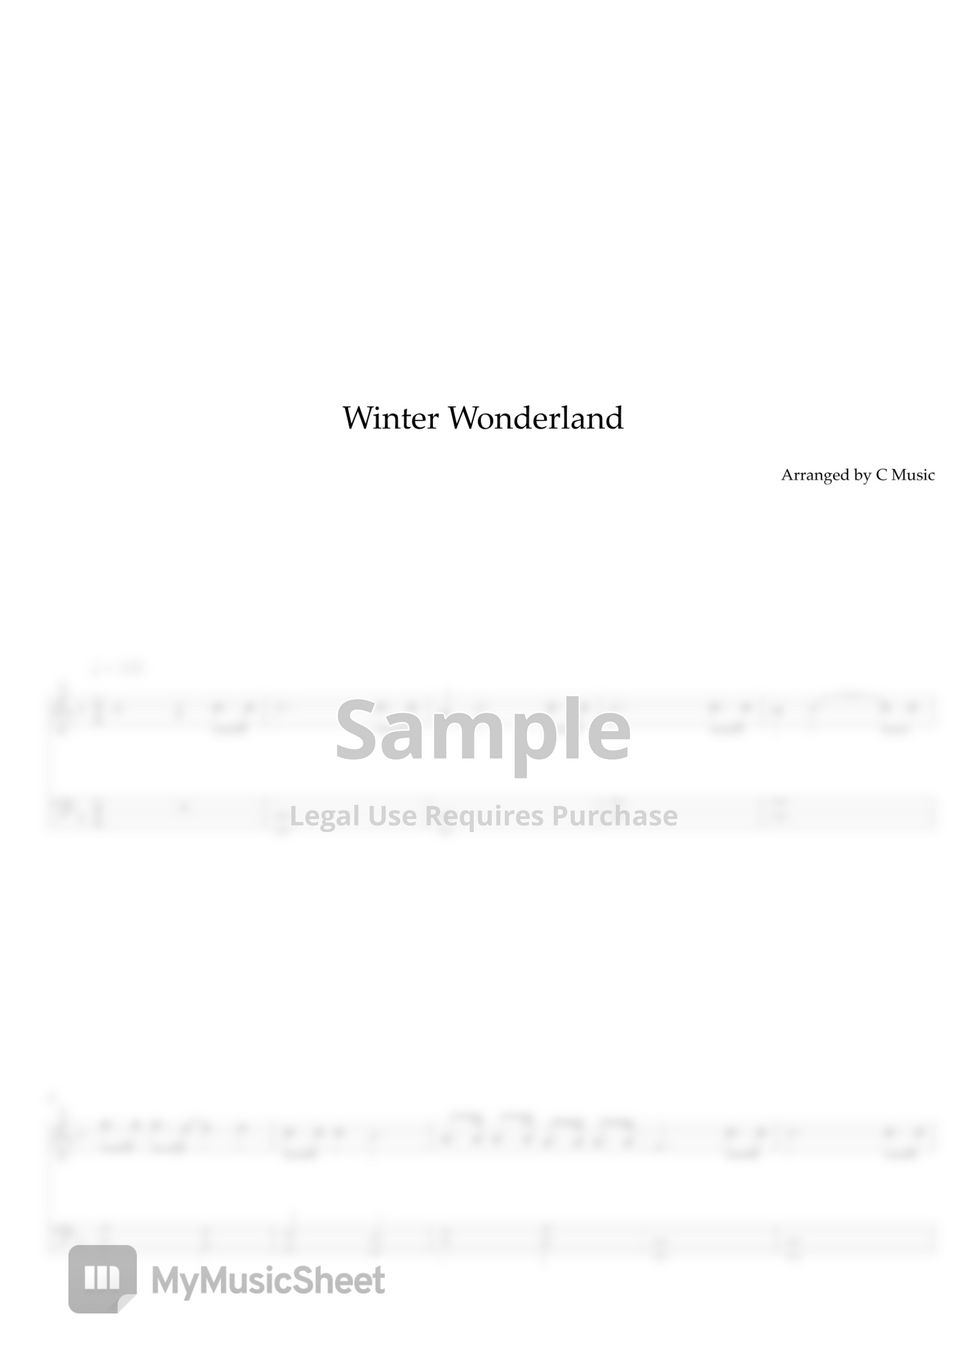 Felix Bernard - Winter Wonderland (Easy Version) by C Music